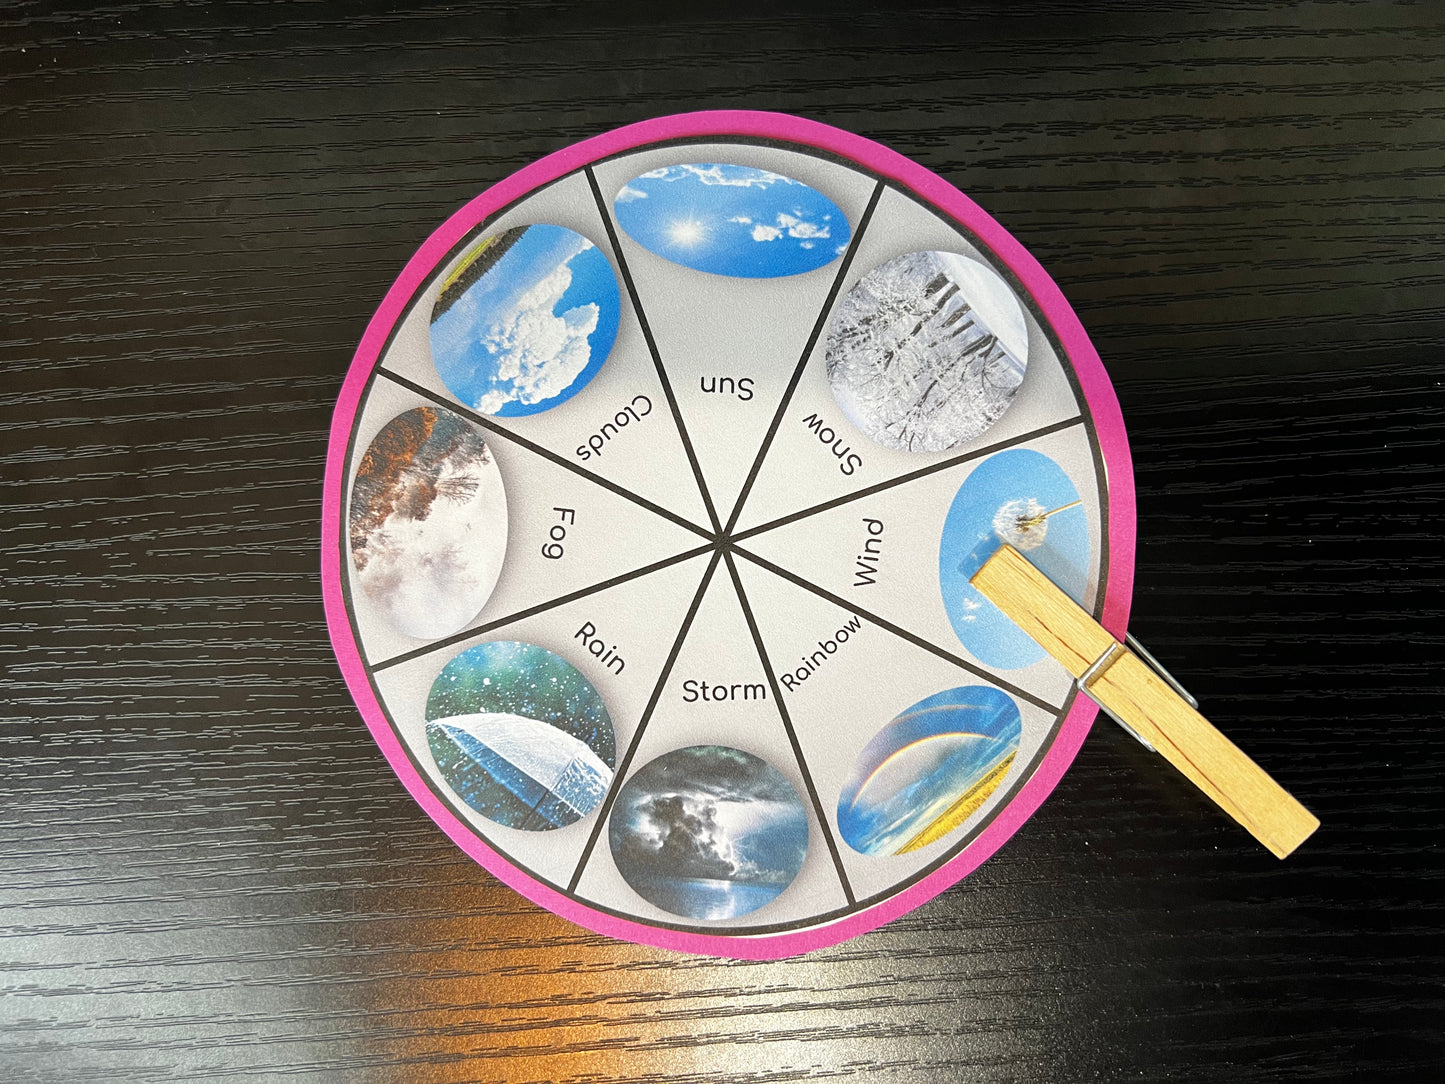 Teaching Tool ~ Weather Wheel